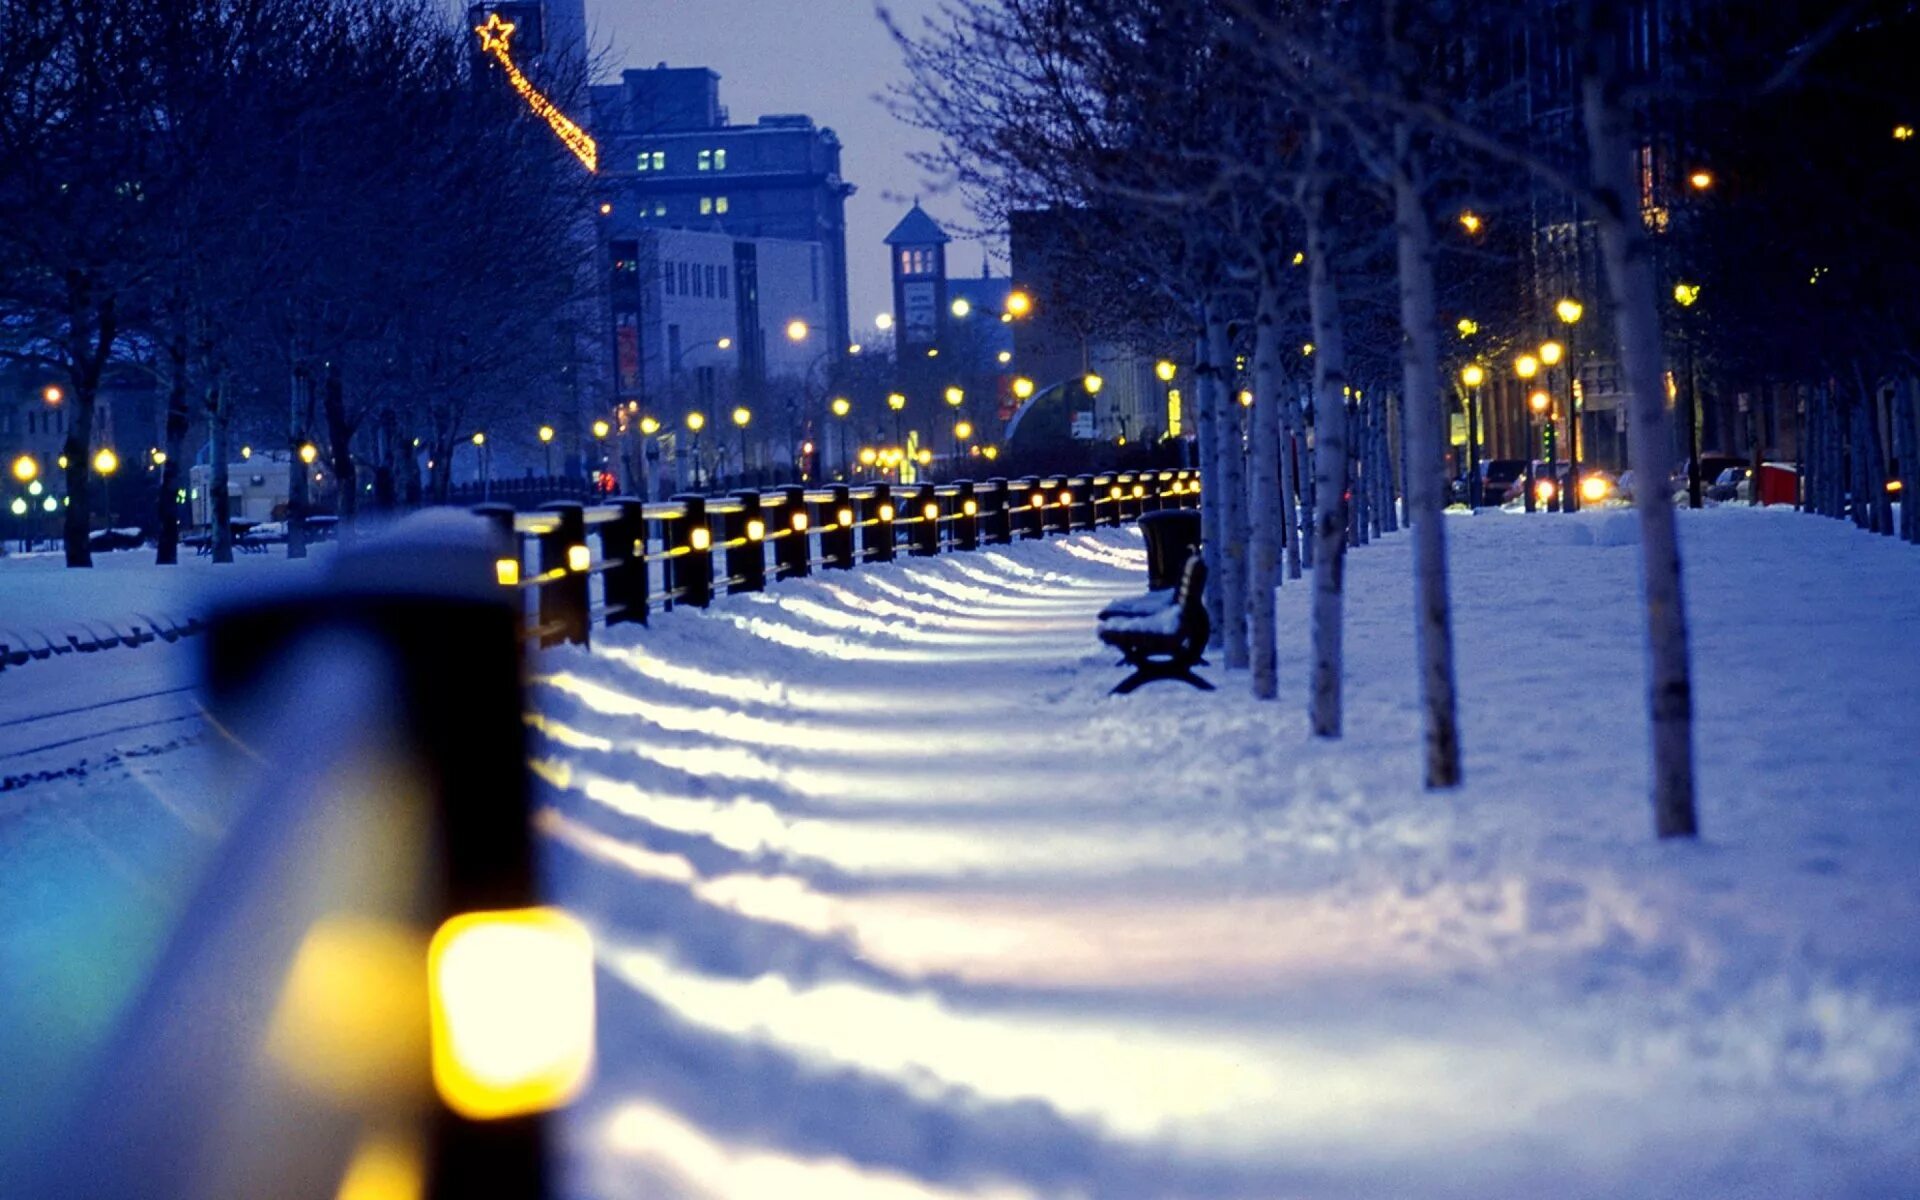 Город снег вечер. Зима в городе. Зимняя ночь в городе. Ночной зимний город. Зимняя вечерняя улица.